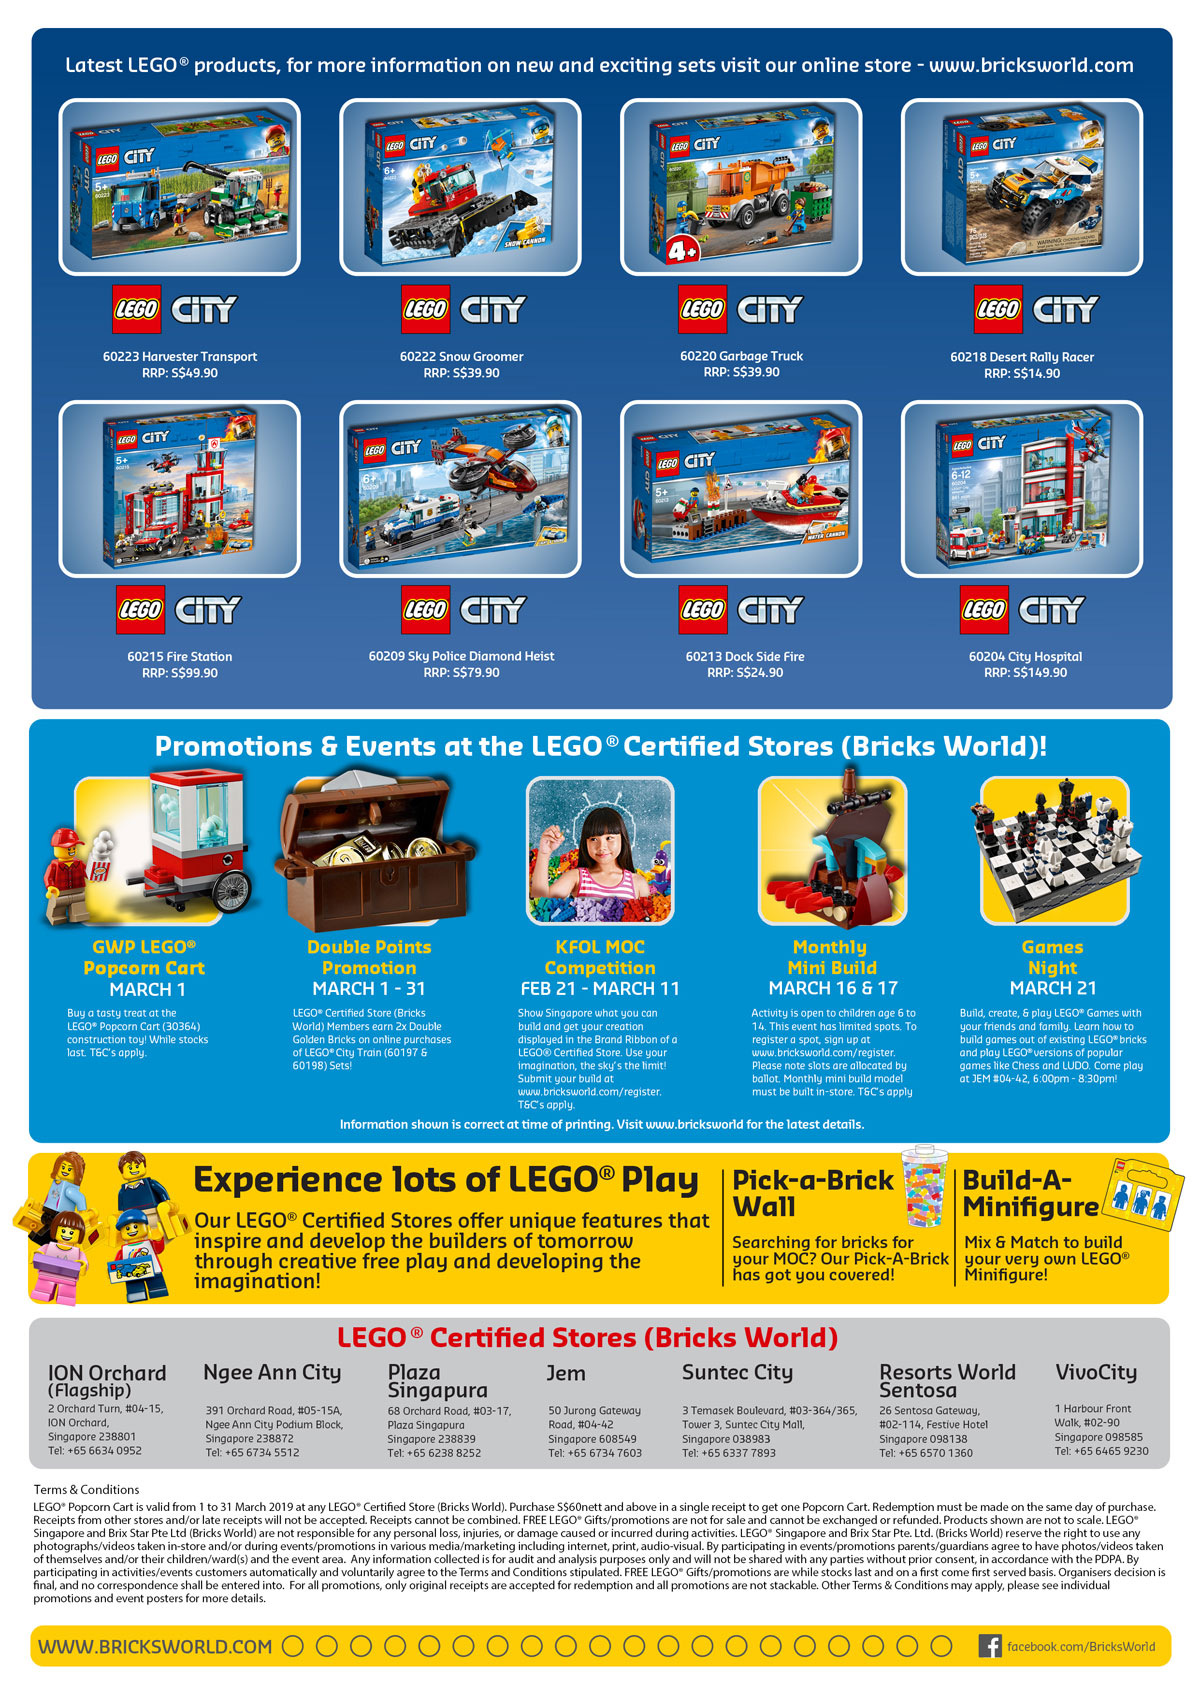 Brickfinder - Bricksworld LEGO Certified Store March 2019 Promotions